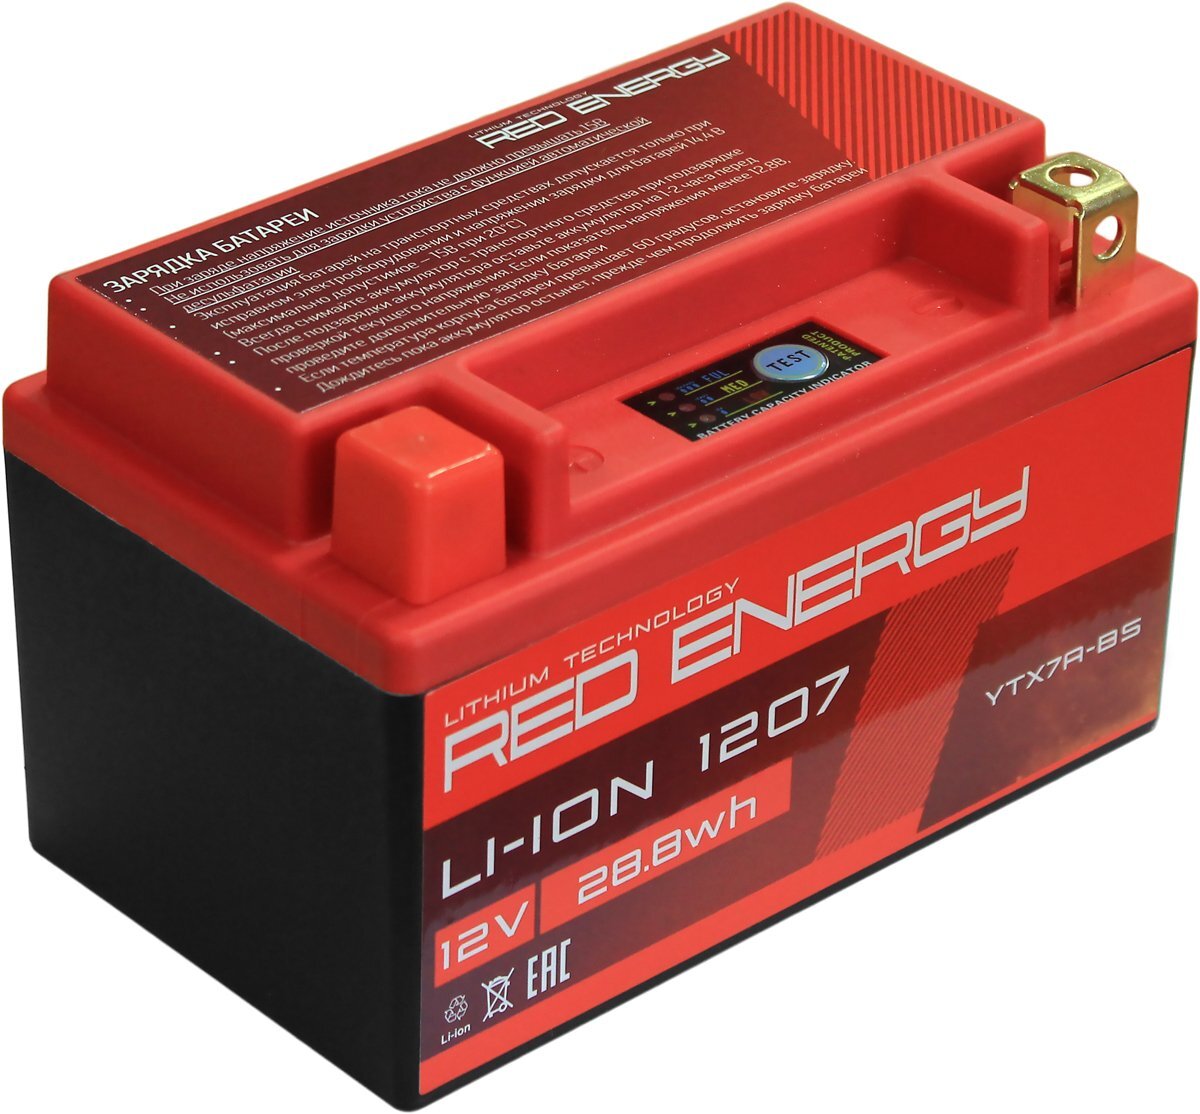 Battery 1207. Red Energy li-ion 1204. АКБ 1207. Аккумулятор li-lon 48×67×110m. Автономный источник питания на аккумулятор Lipo 4.